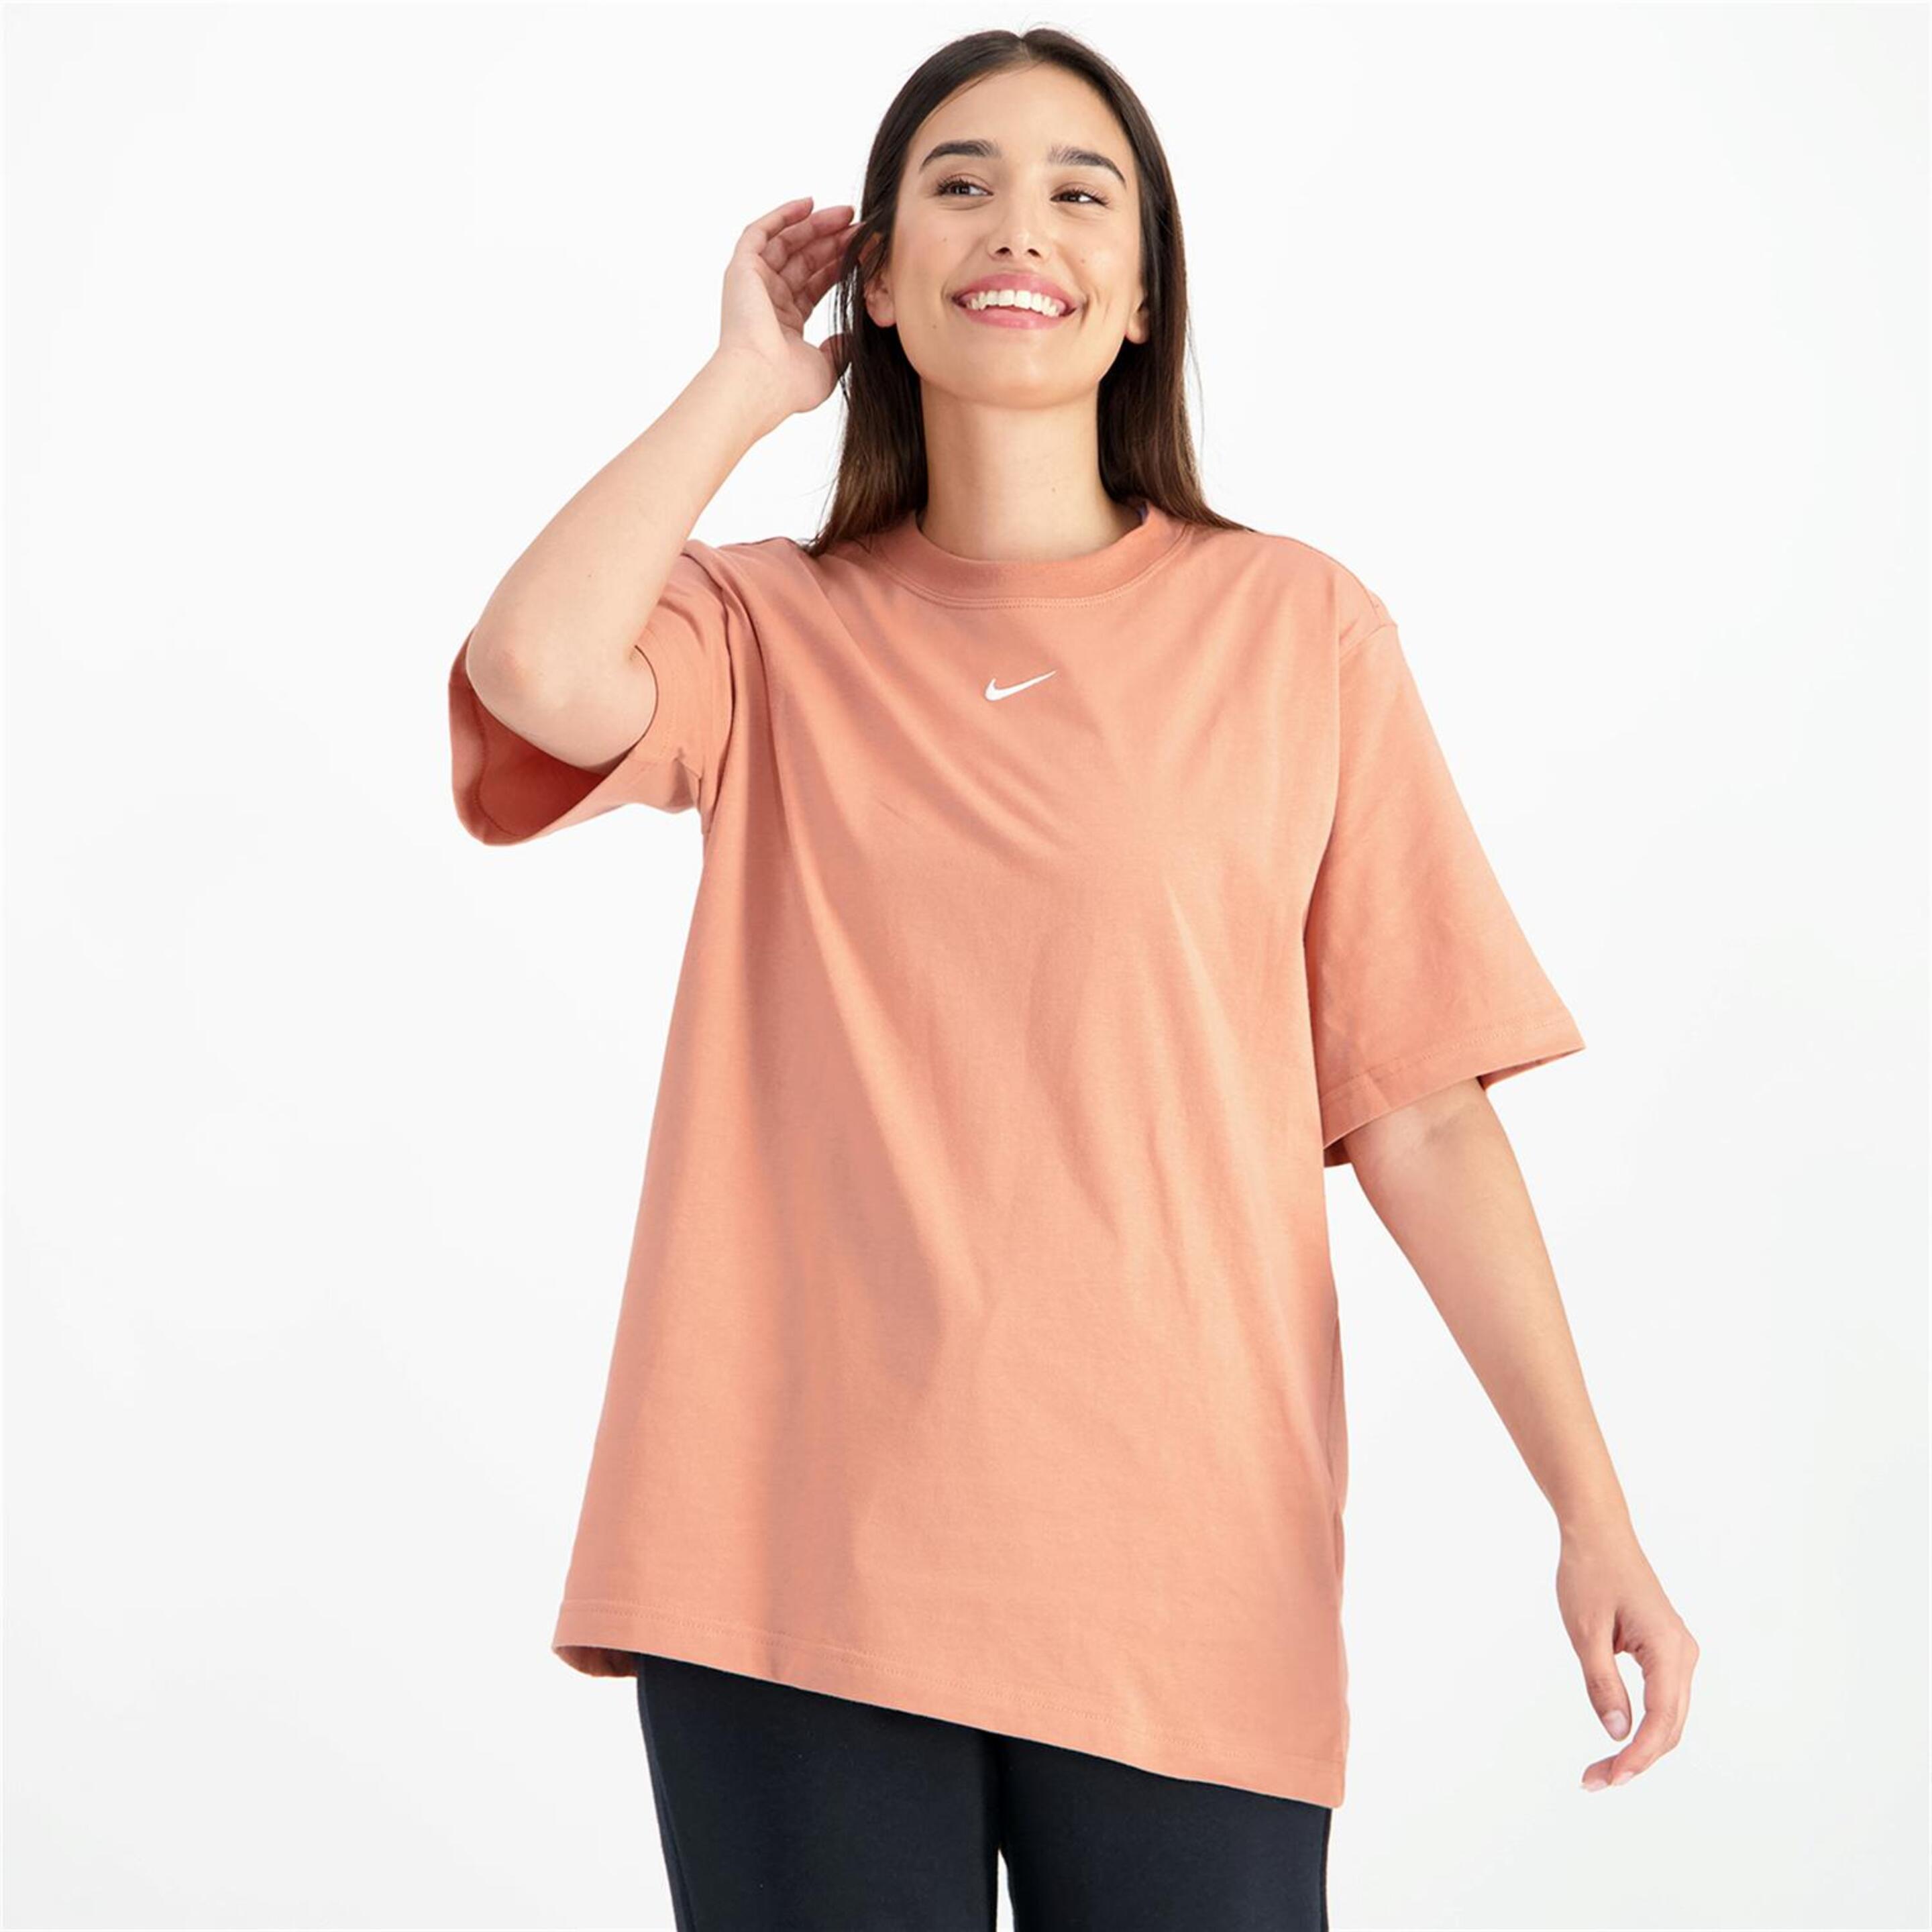 T-shirt Nike - marron - T-shirt Oversize Mulher